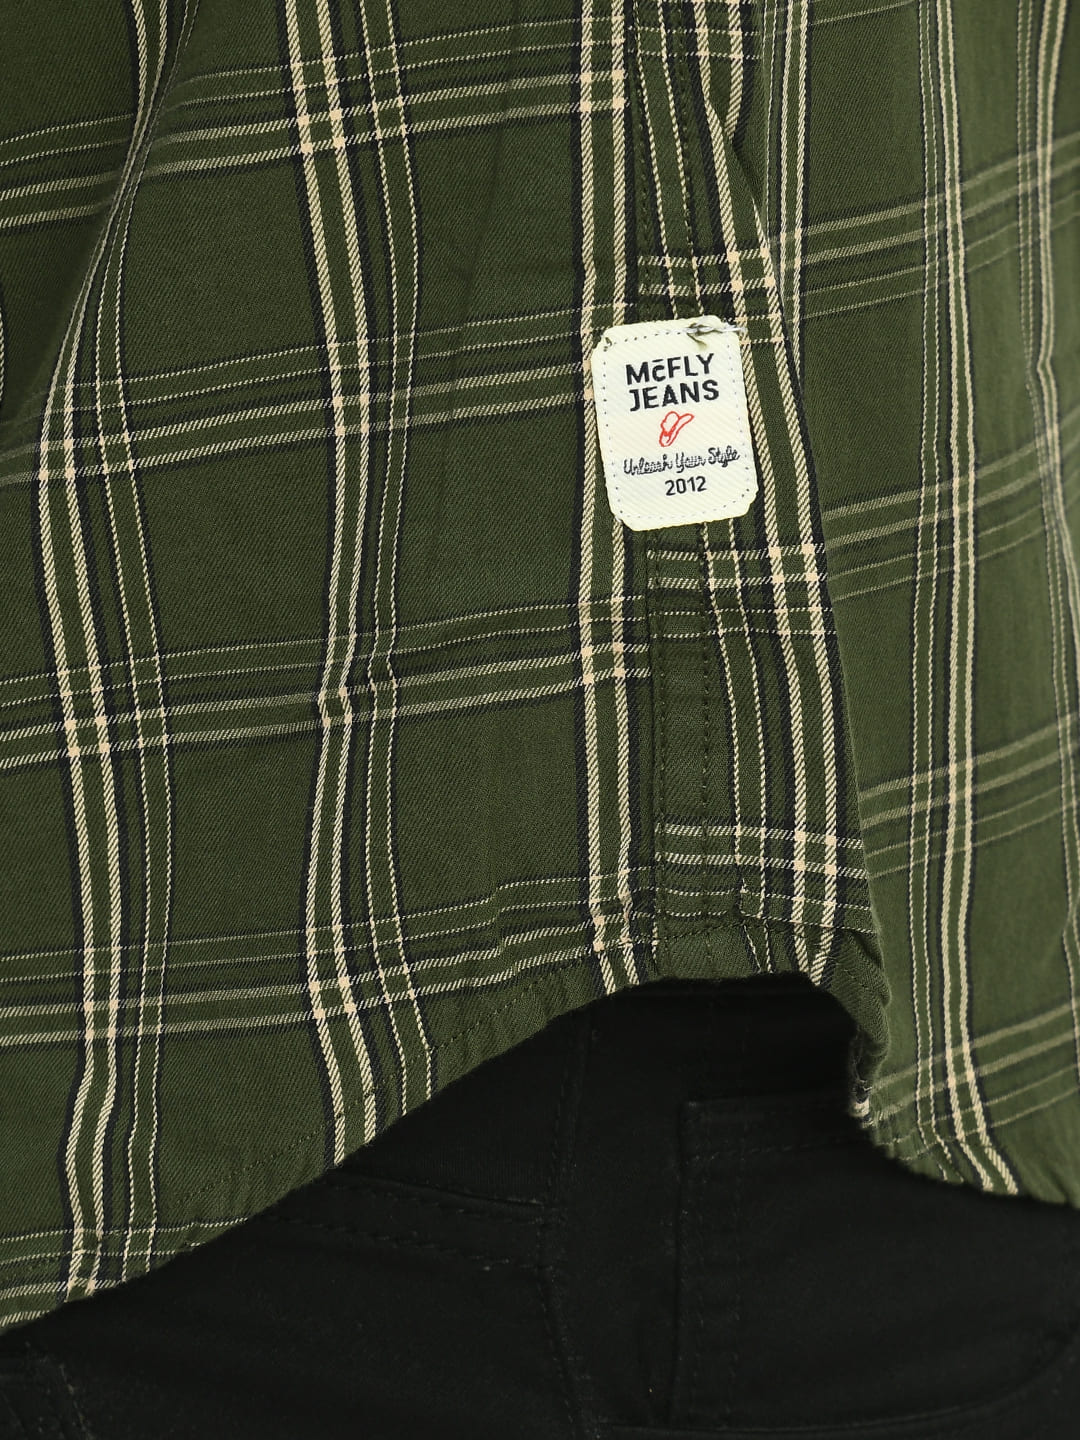 Men’s Checkered Spread Full Sleeve Shirt - Green - SQUIREHOOD